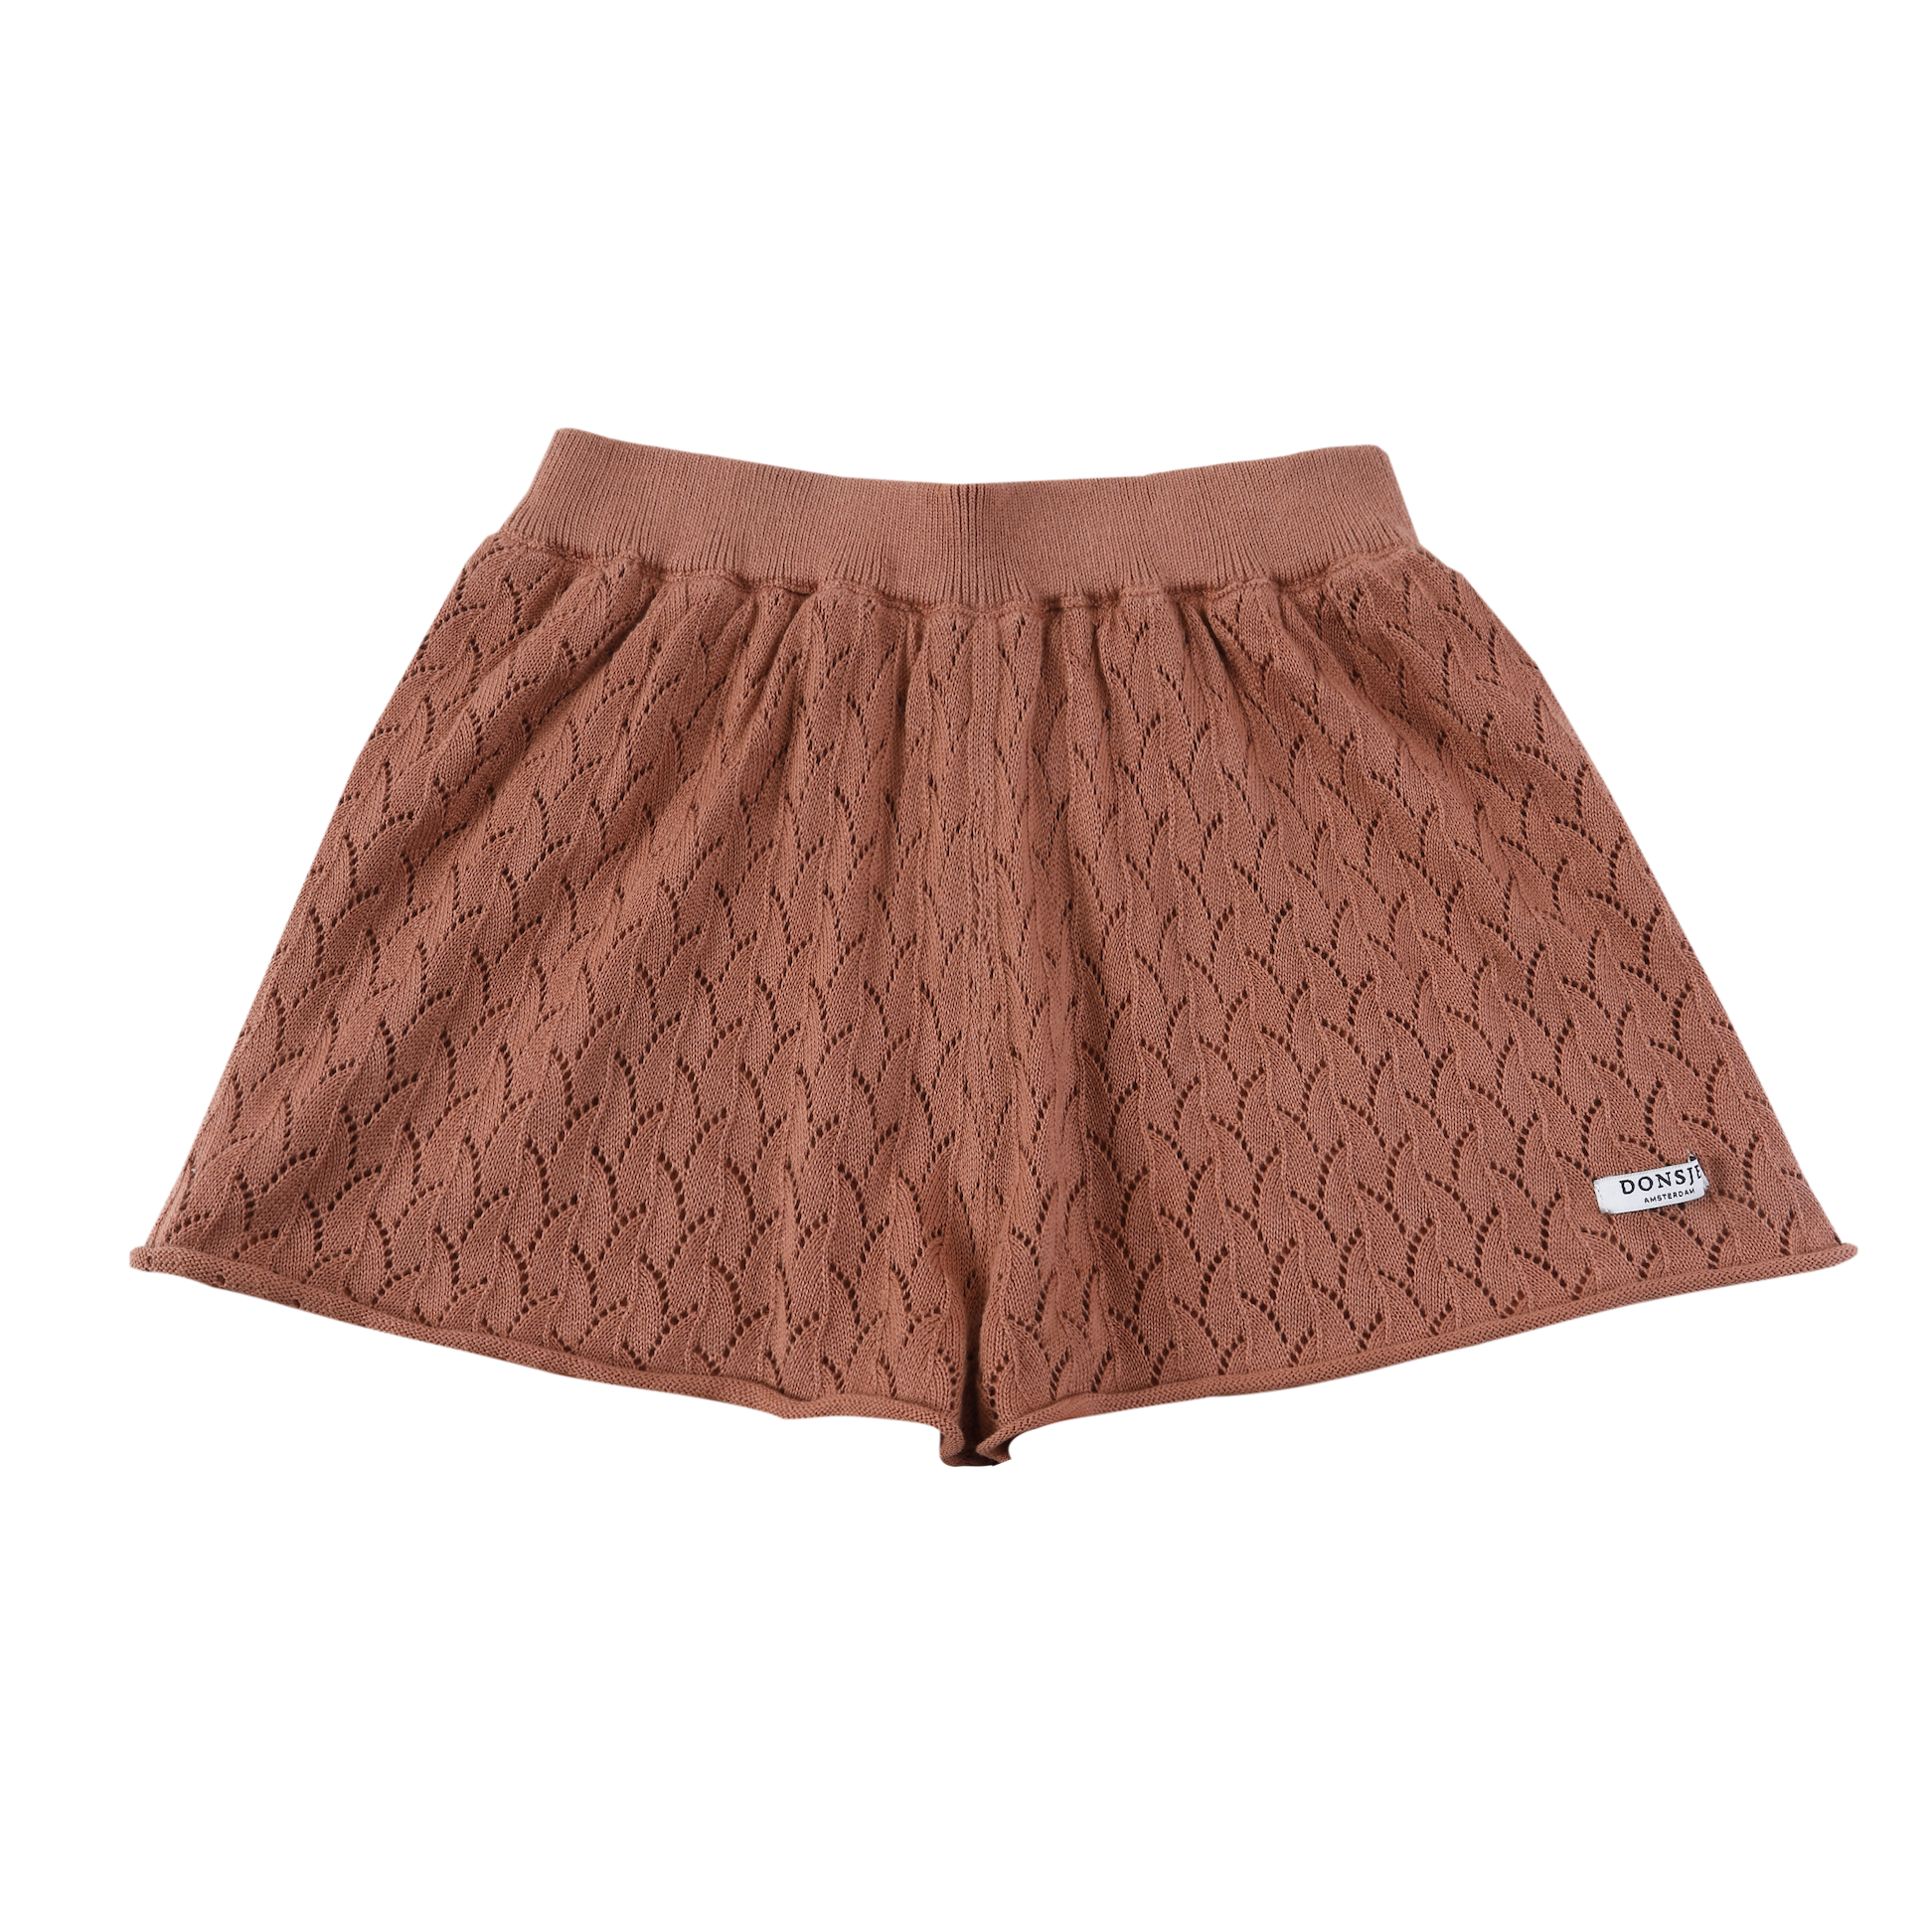 Donsje logo-tag shorts - Brown